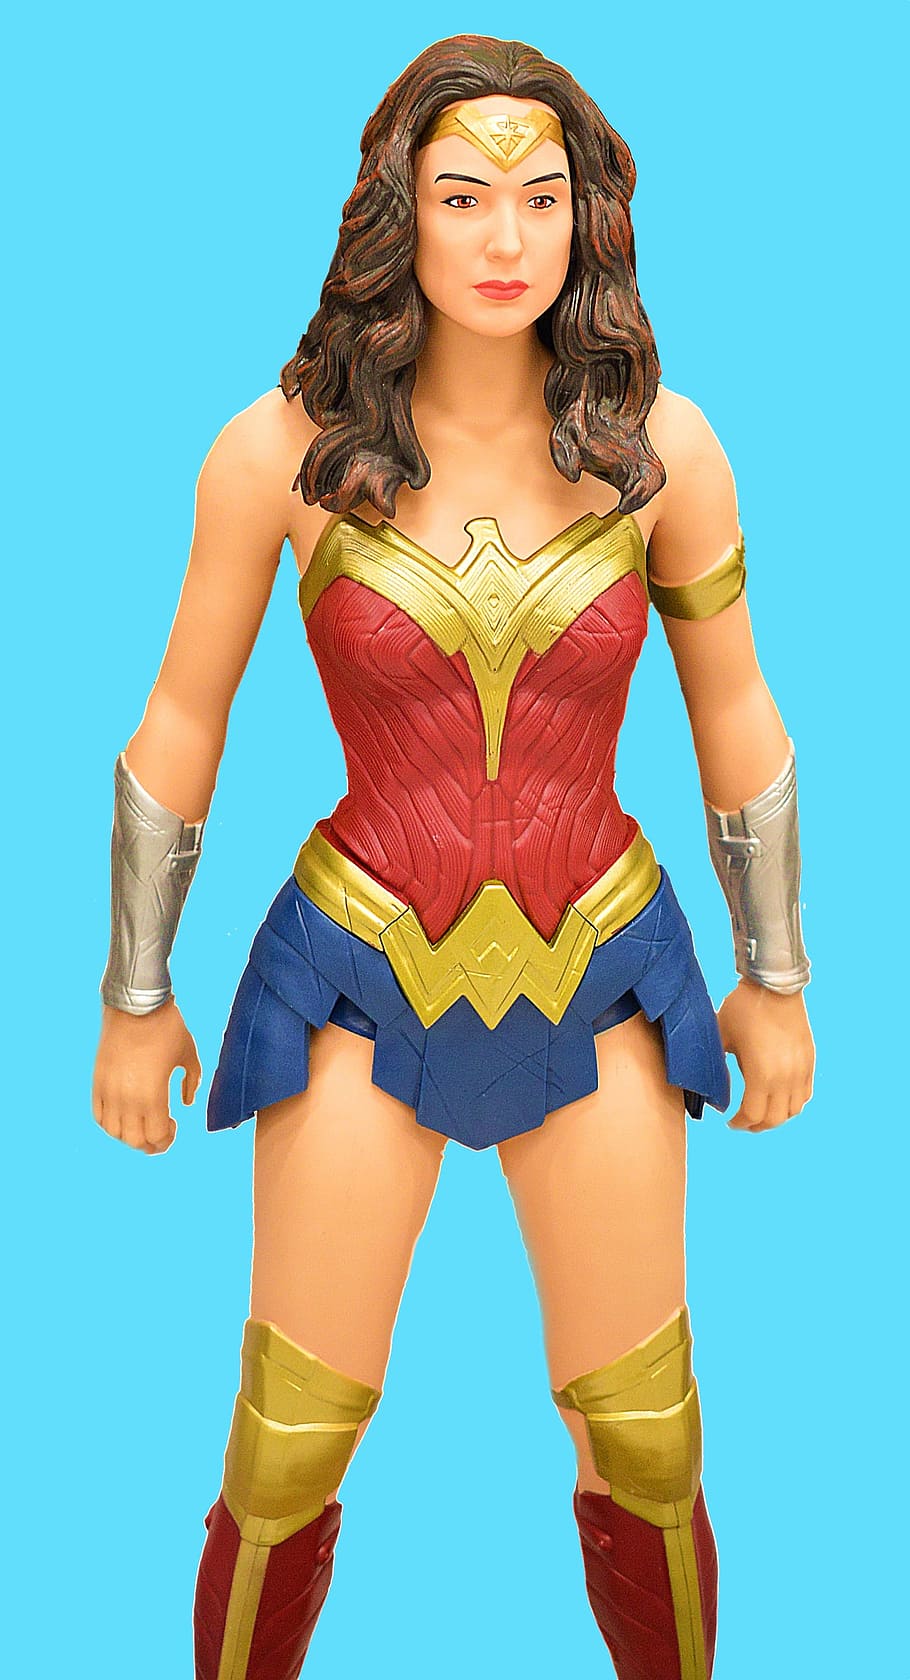 Wonder Woman, Superhero, Strong, kekuatan, perempuan, kostum, kuat, feminisme, feminis, boneka